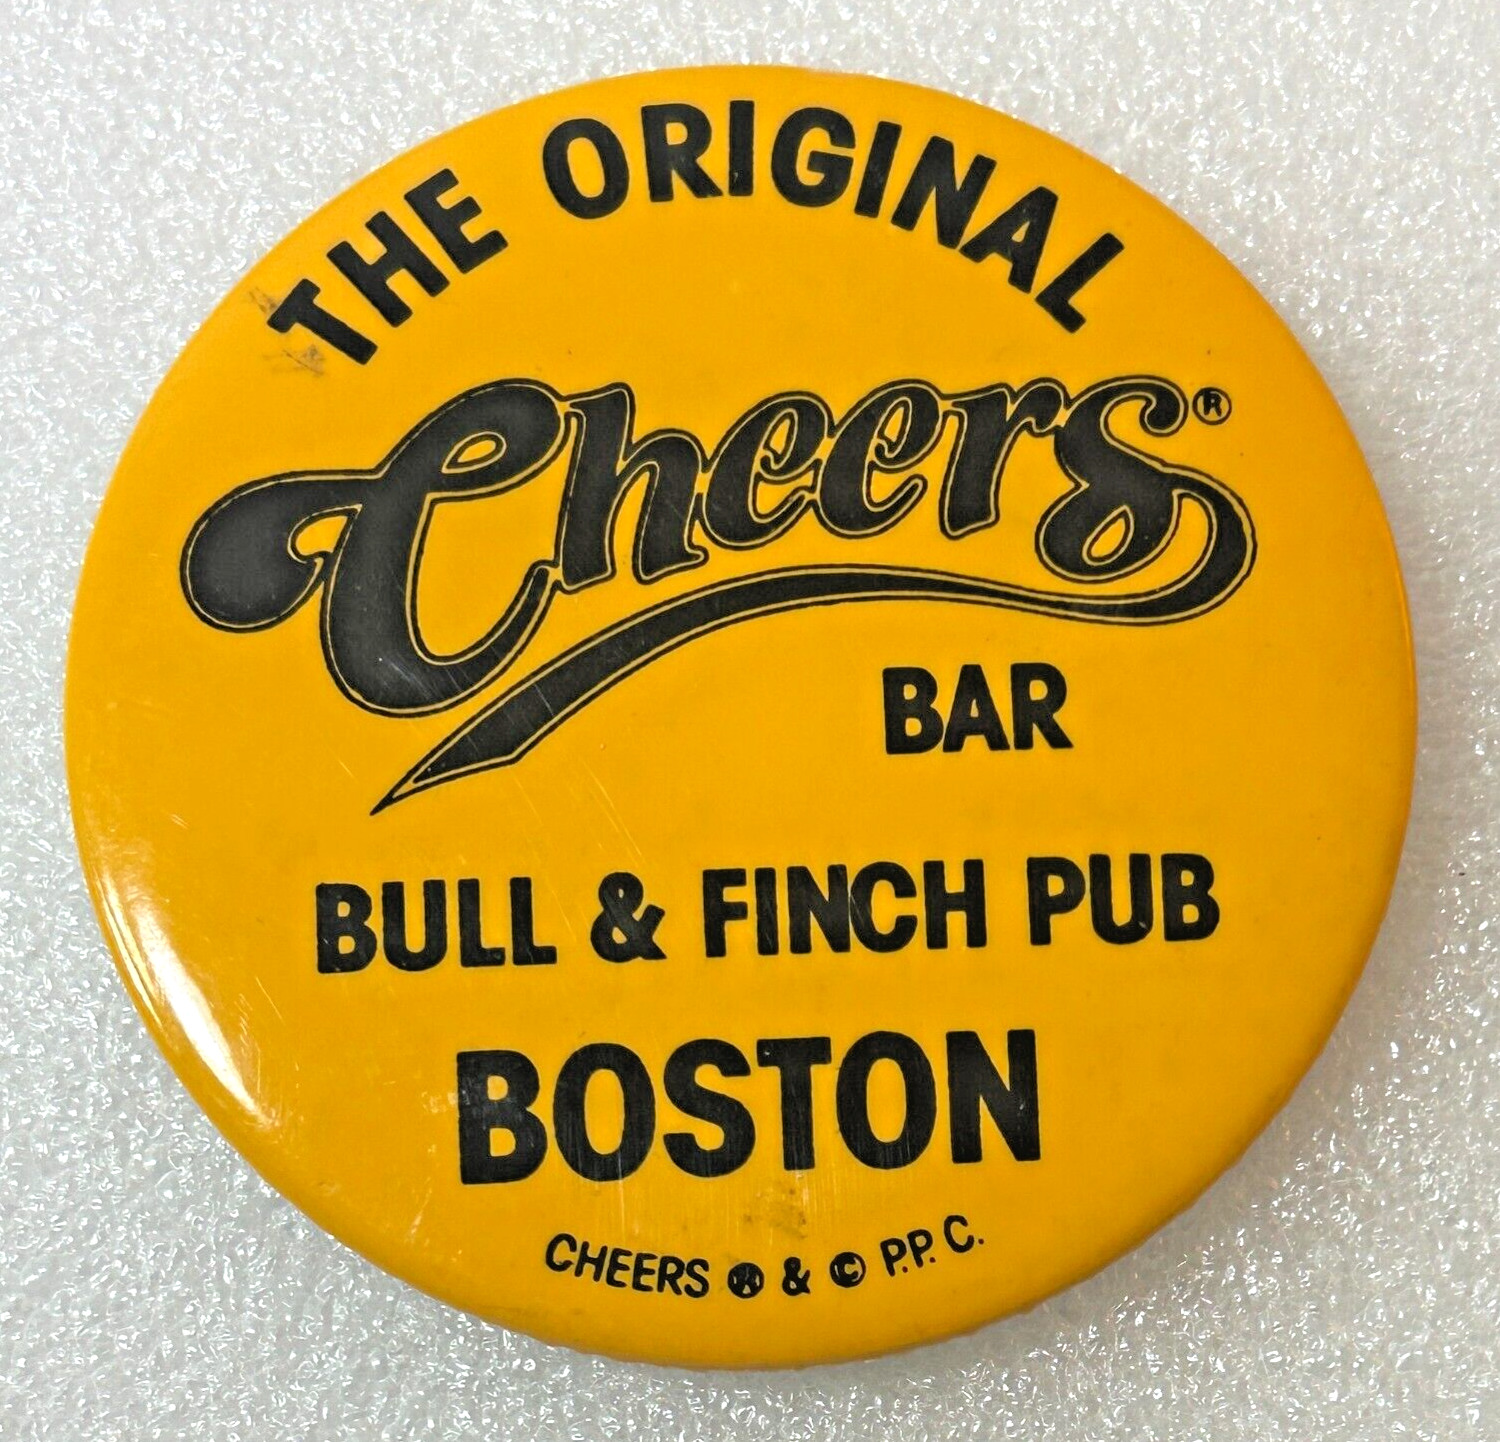 Vintage Collectible Pin Button: The Original Cheers Bar Bull & Finch Pub Boston